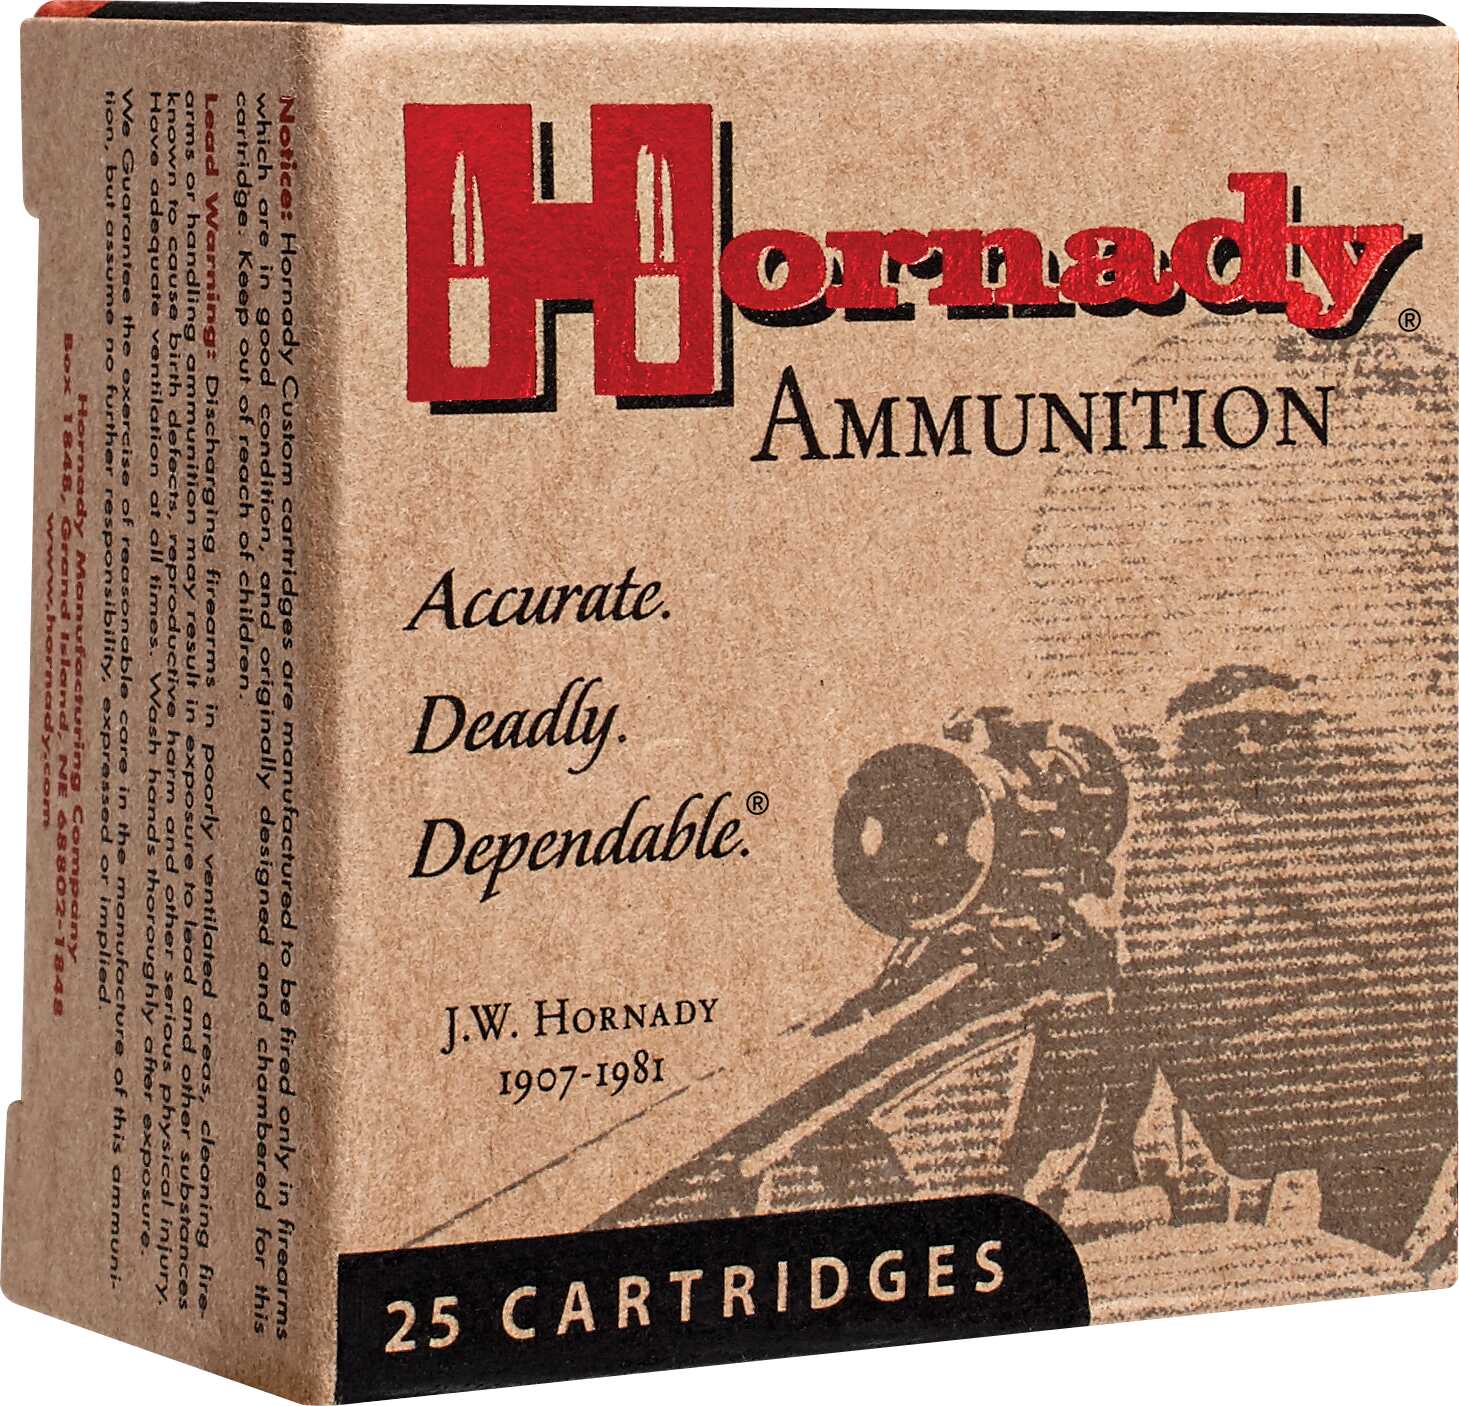 500 S&W Grain Soft Point 20 Rounds Hornady Ammunition